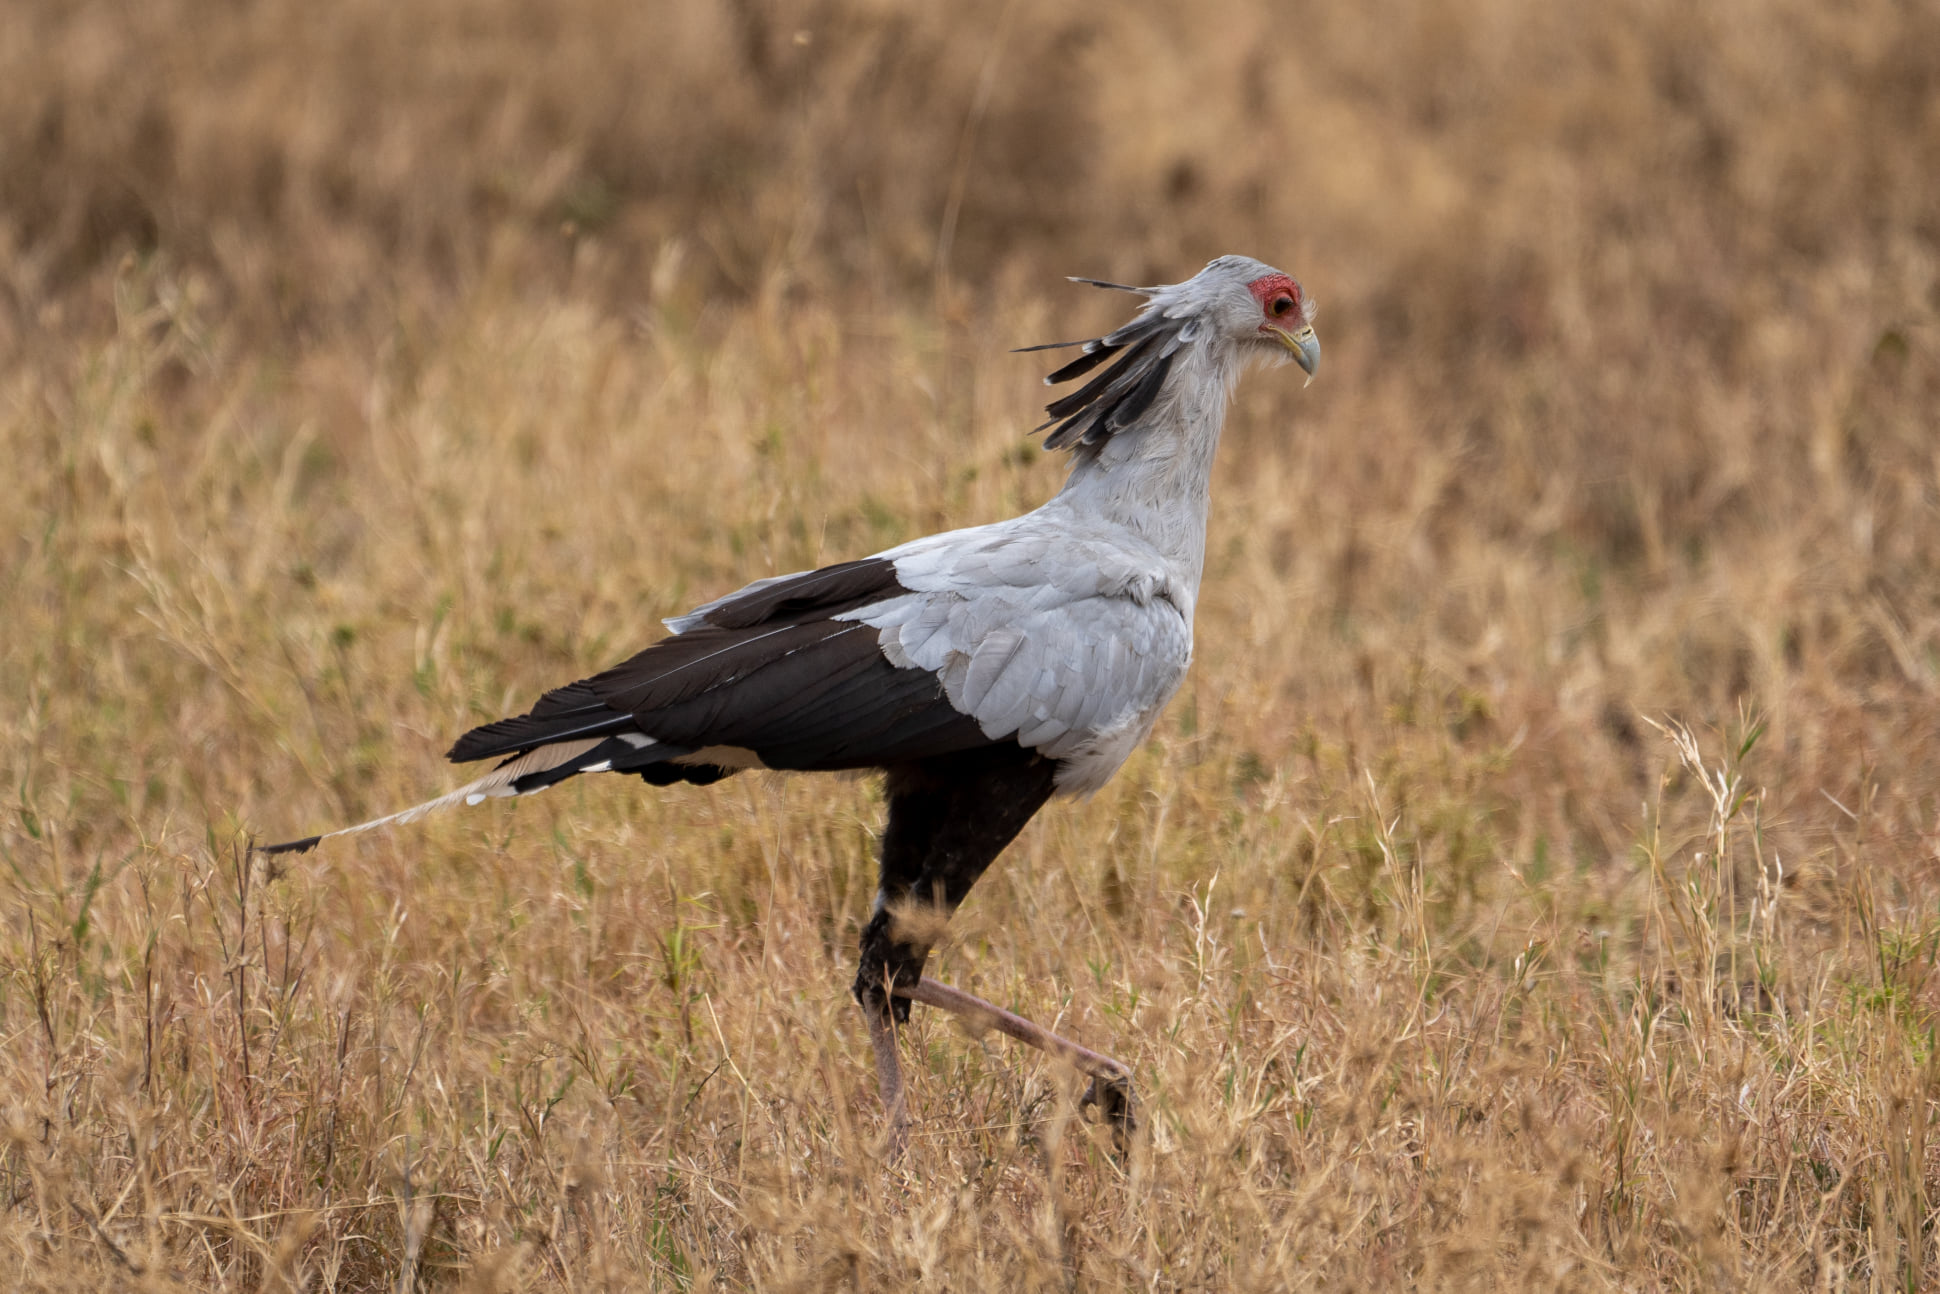 Important bird areas in Uganda